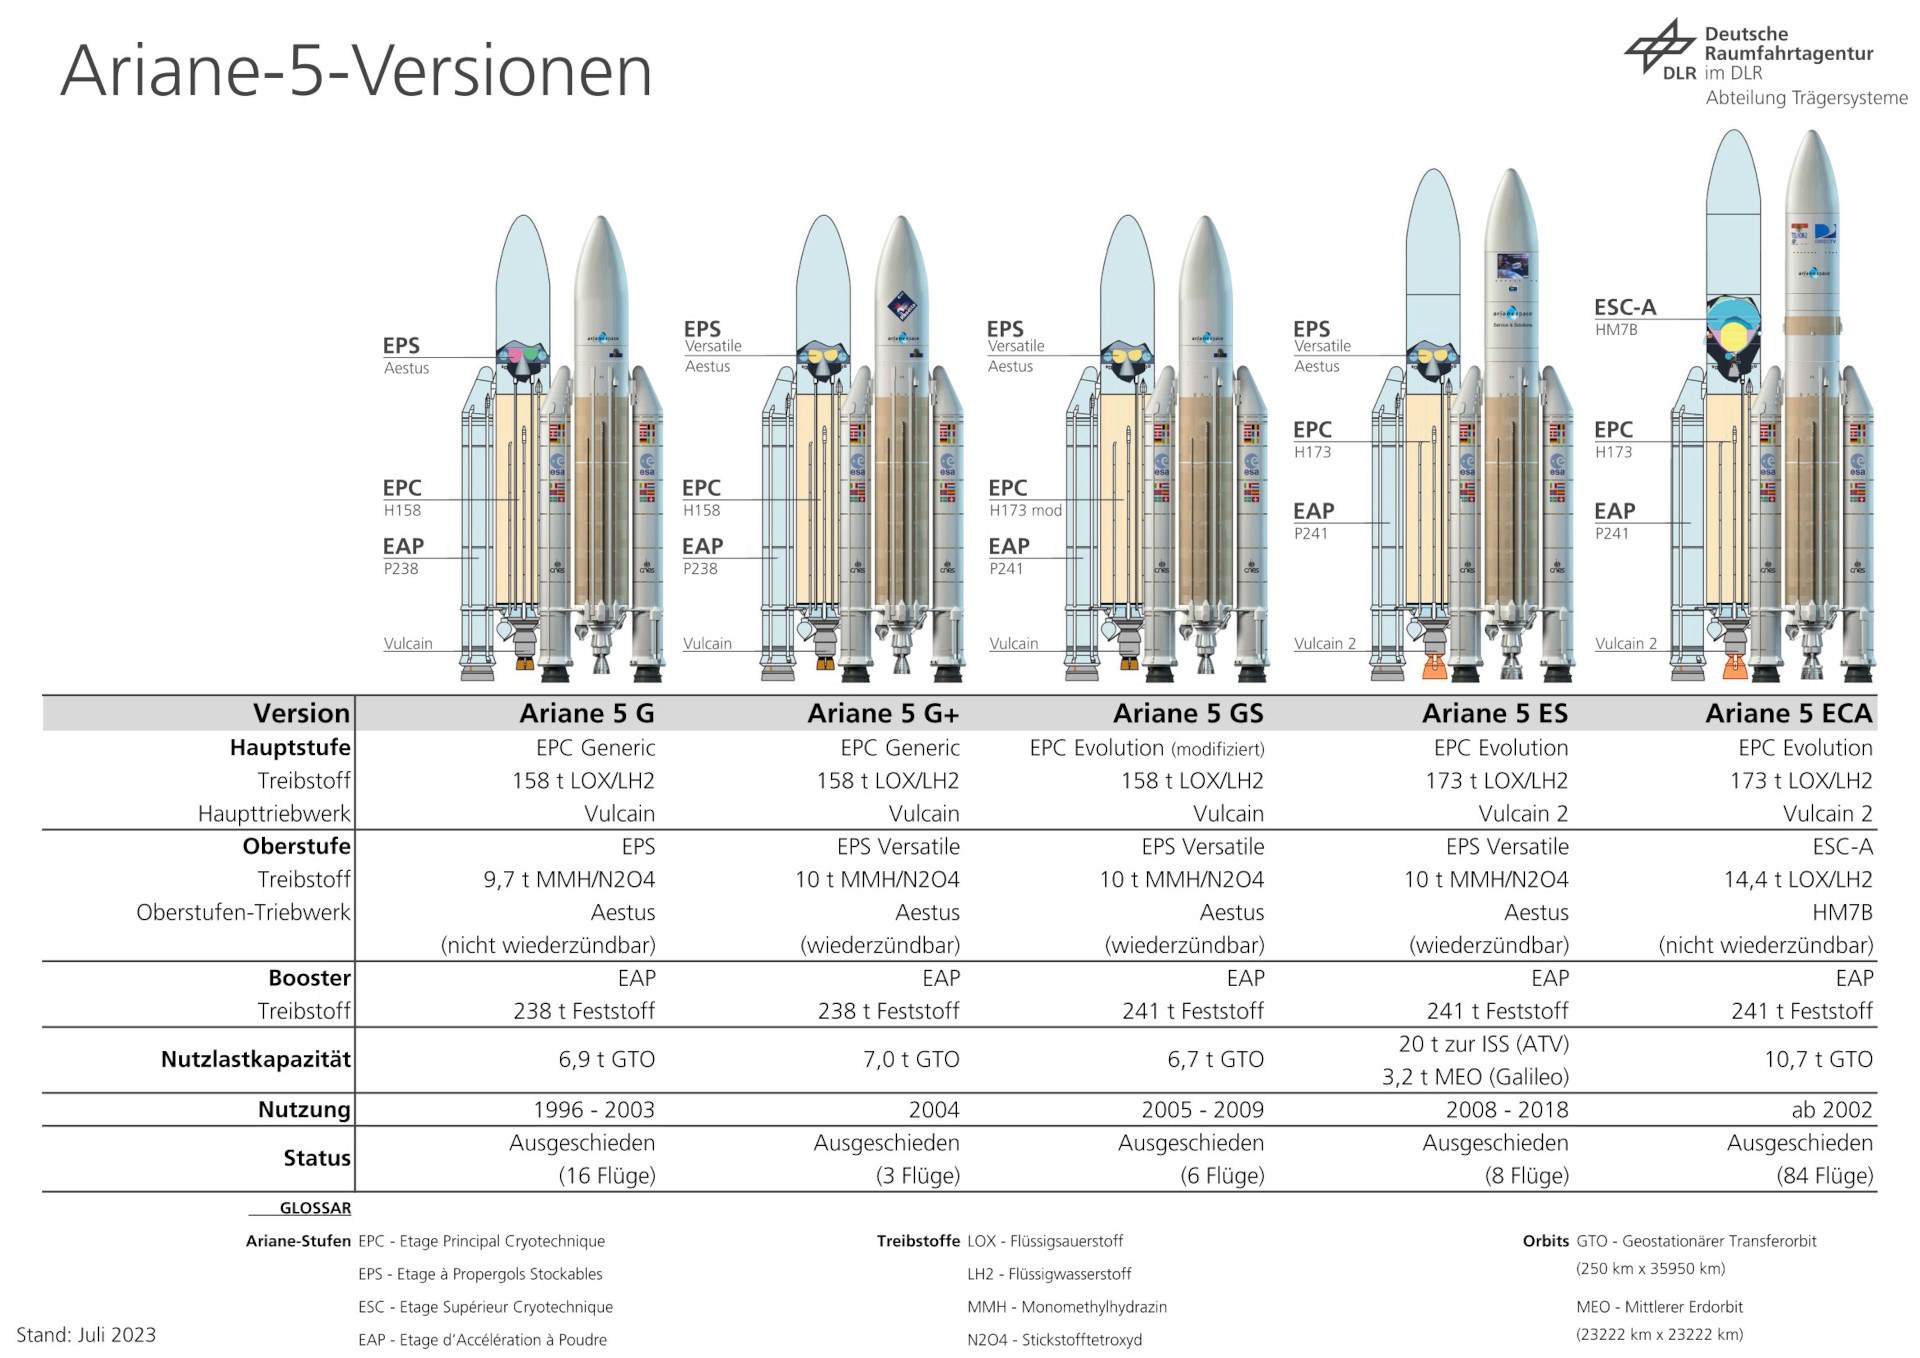 Versions of Ariane 5